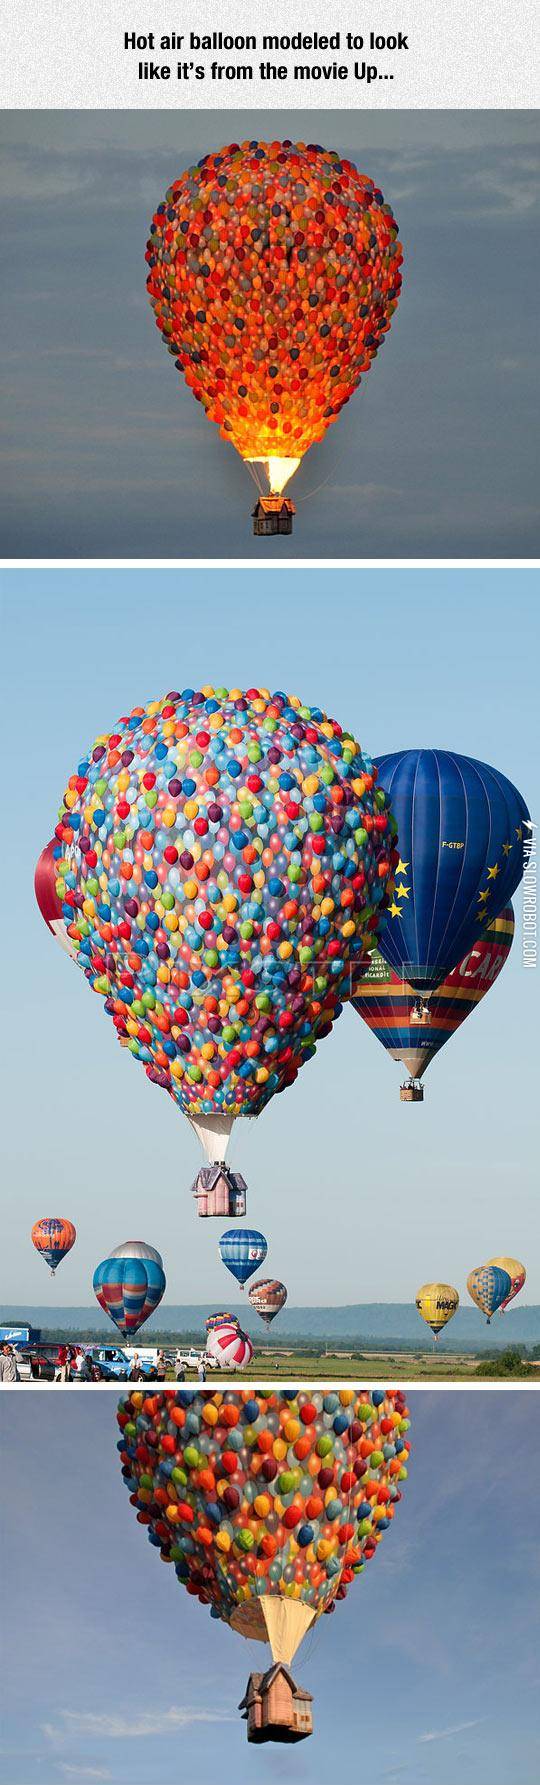 Up+Hot+Air+Balloon